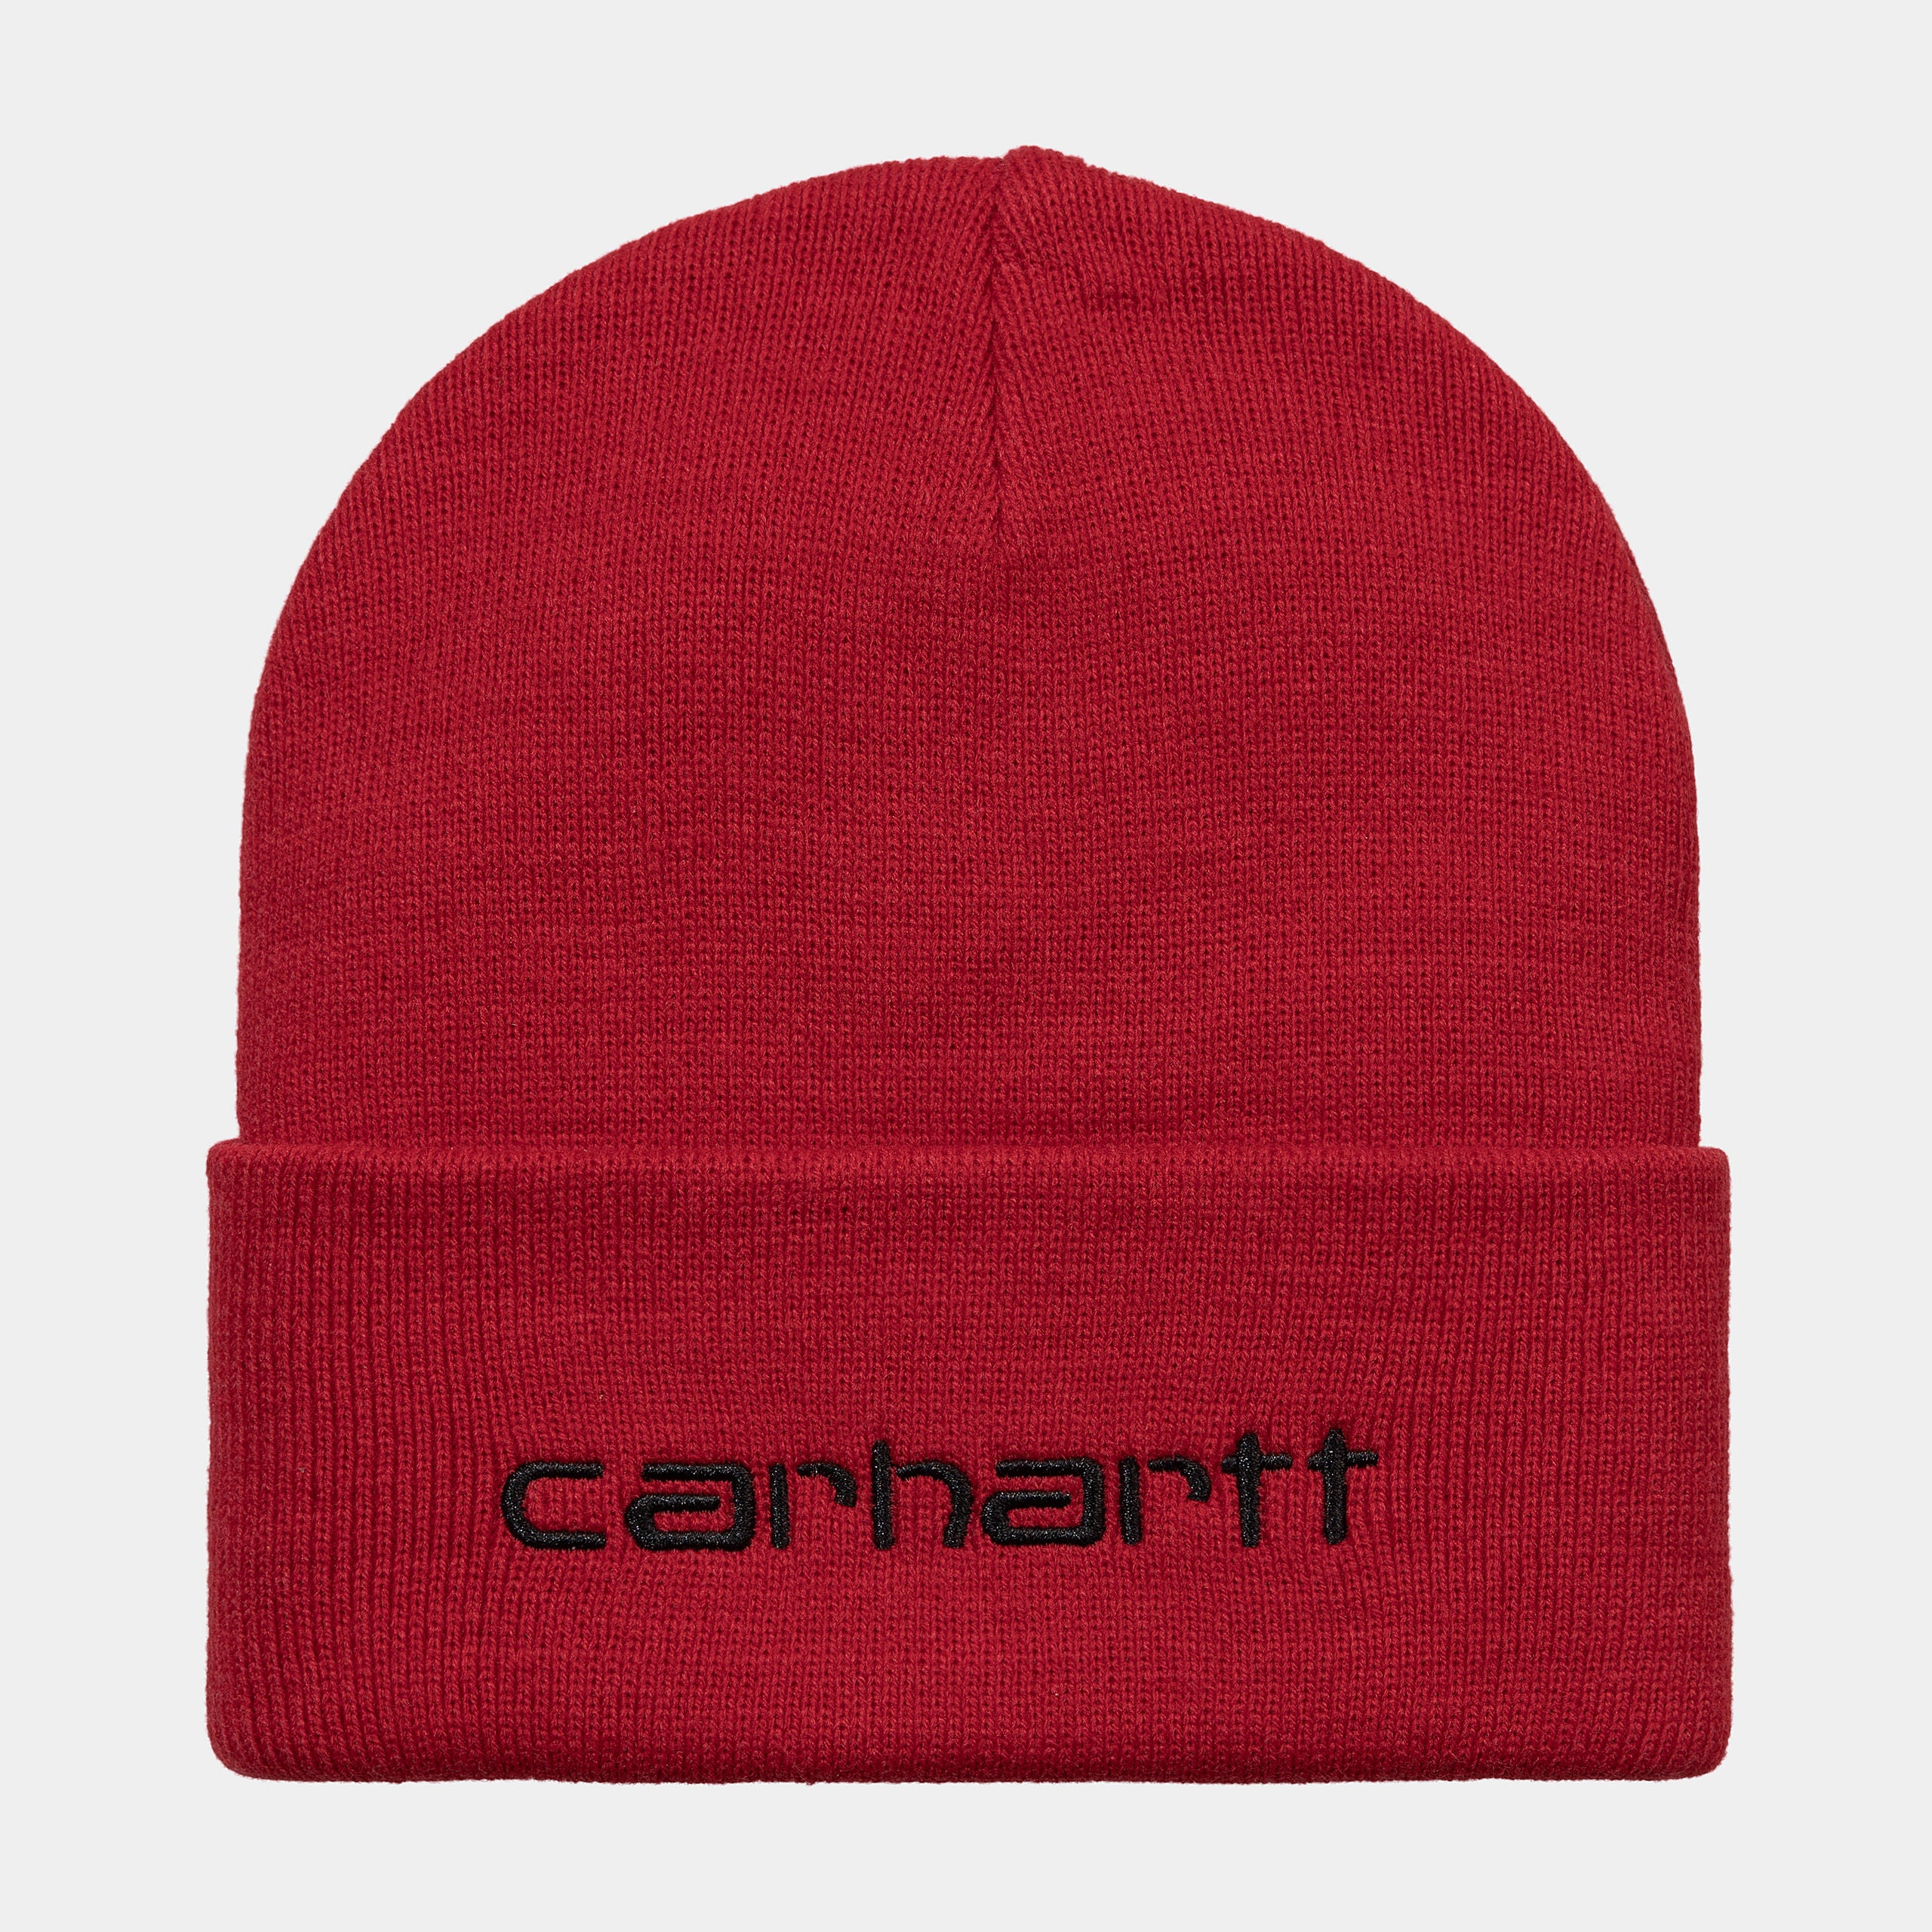 Carhartt rocket red/black script beanie hat